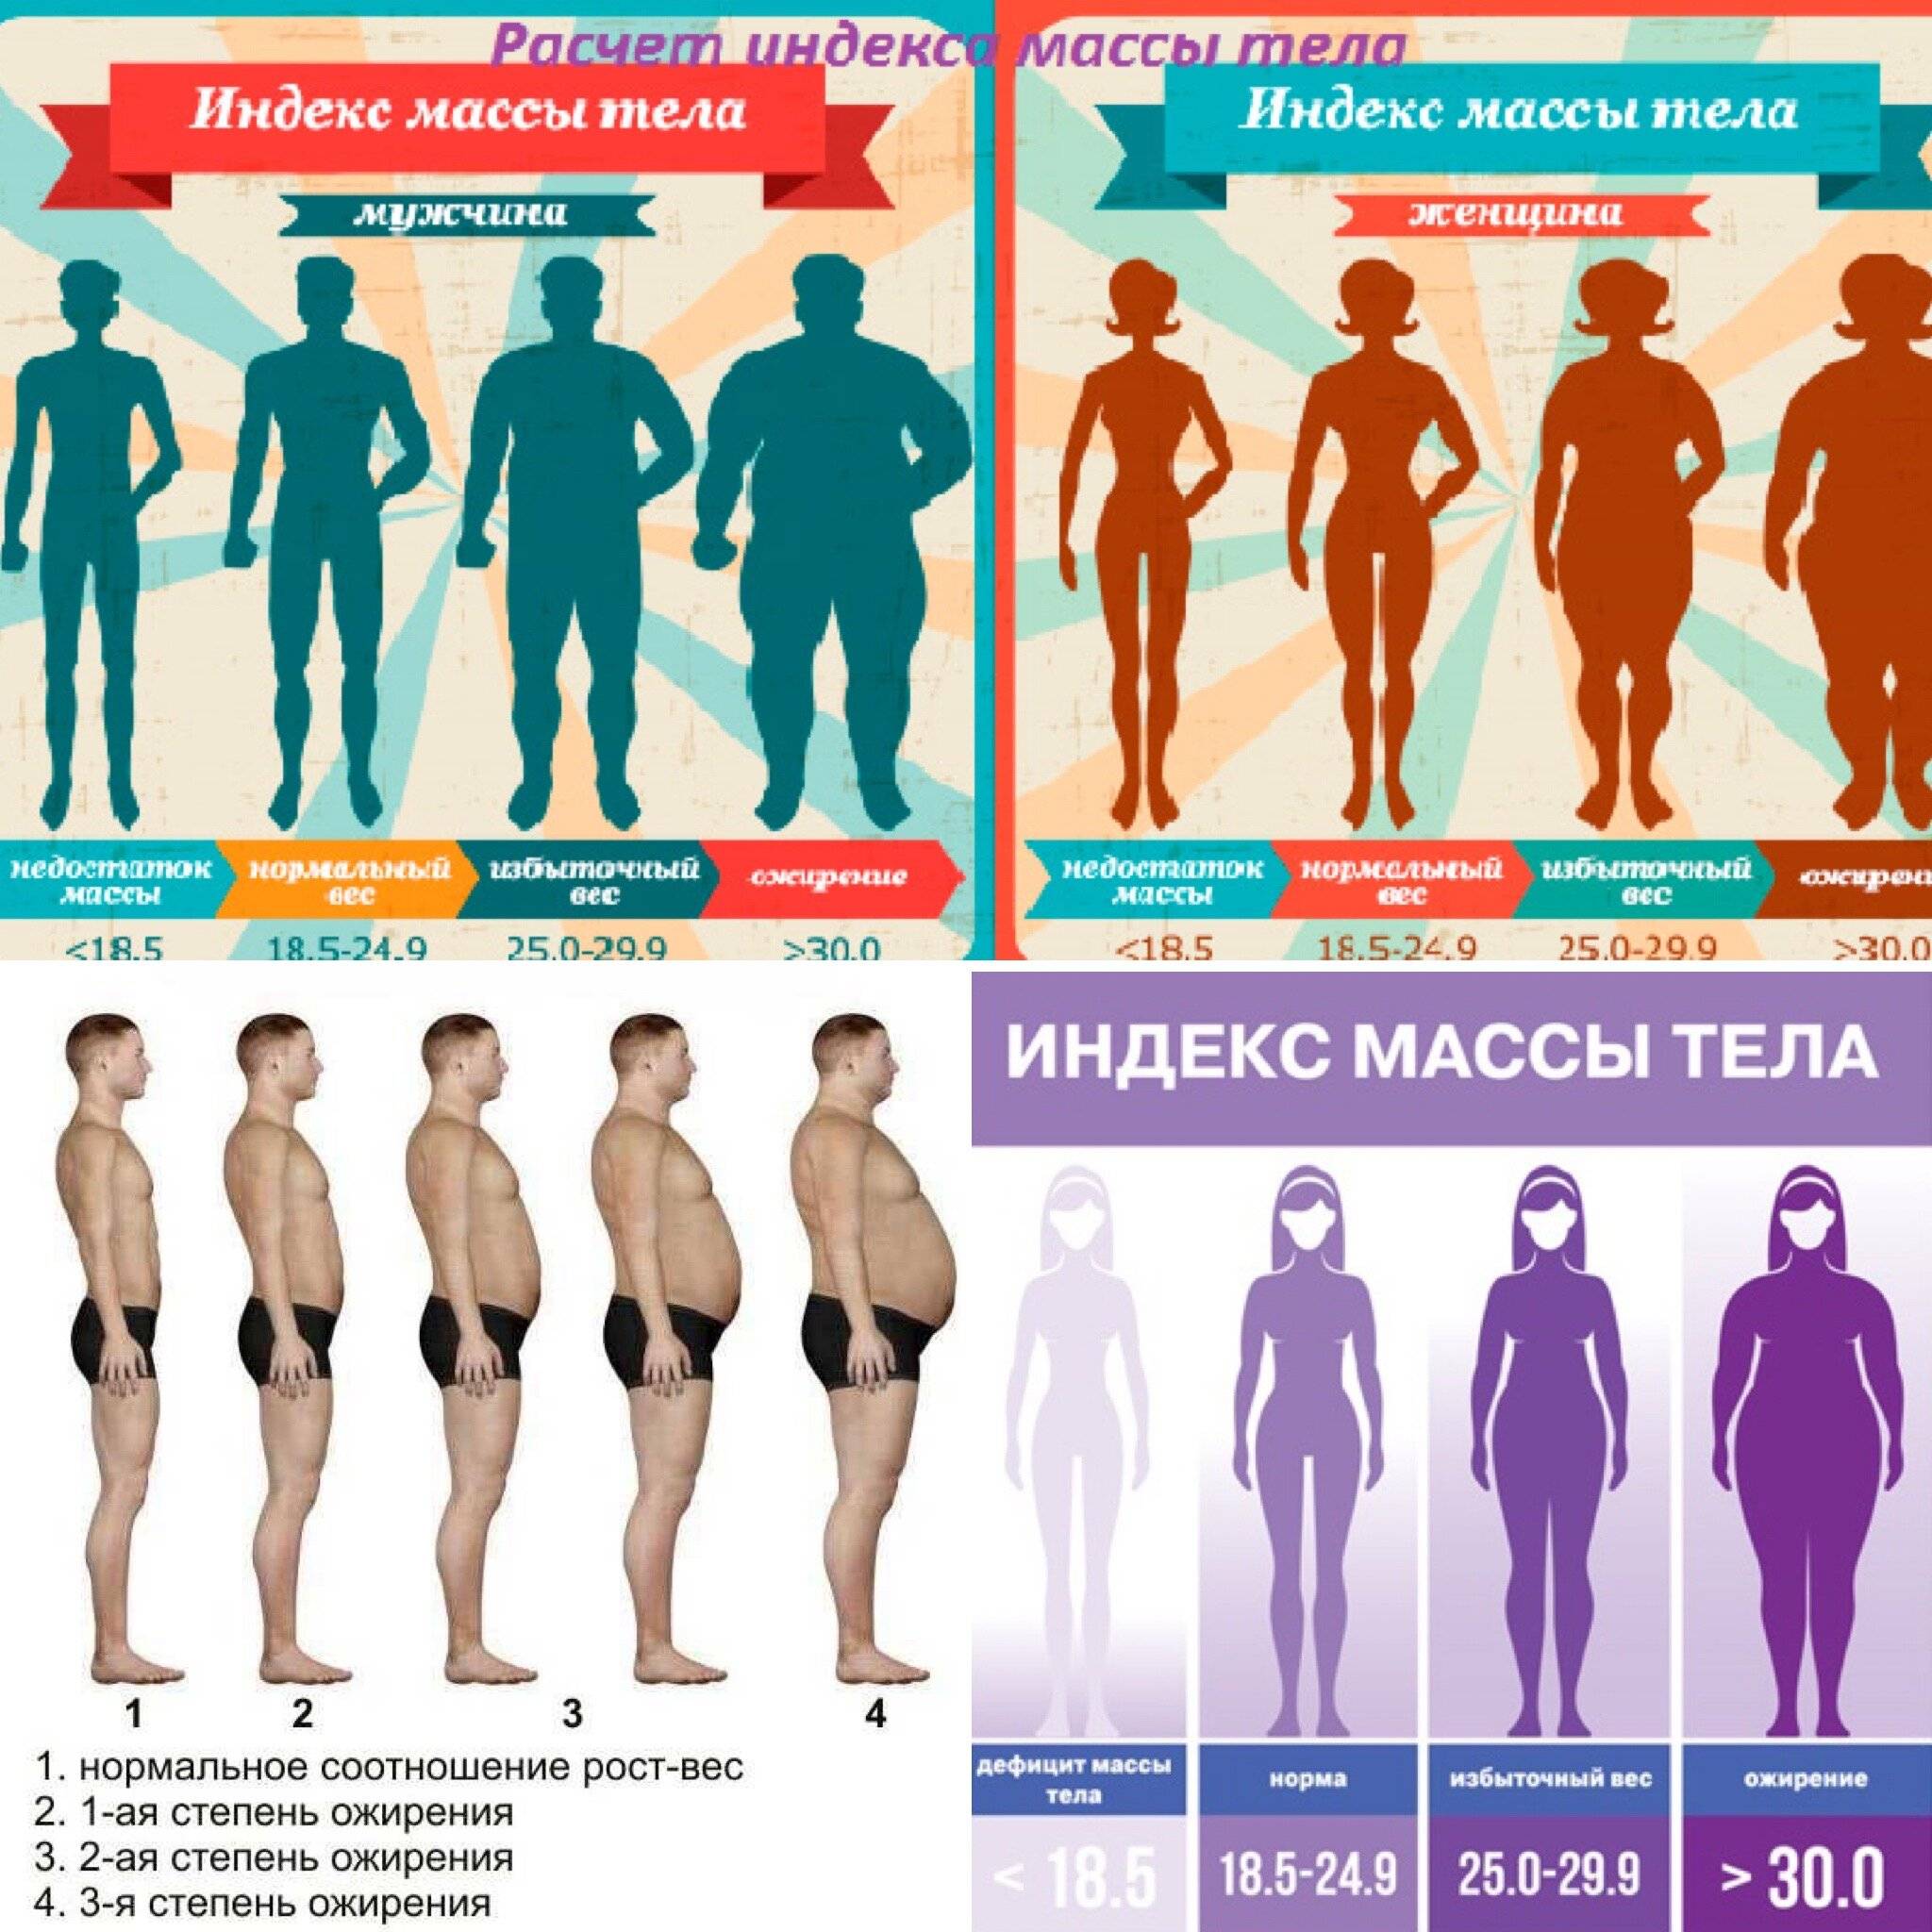 Рост и вес мужчин и женщин